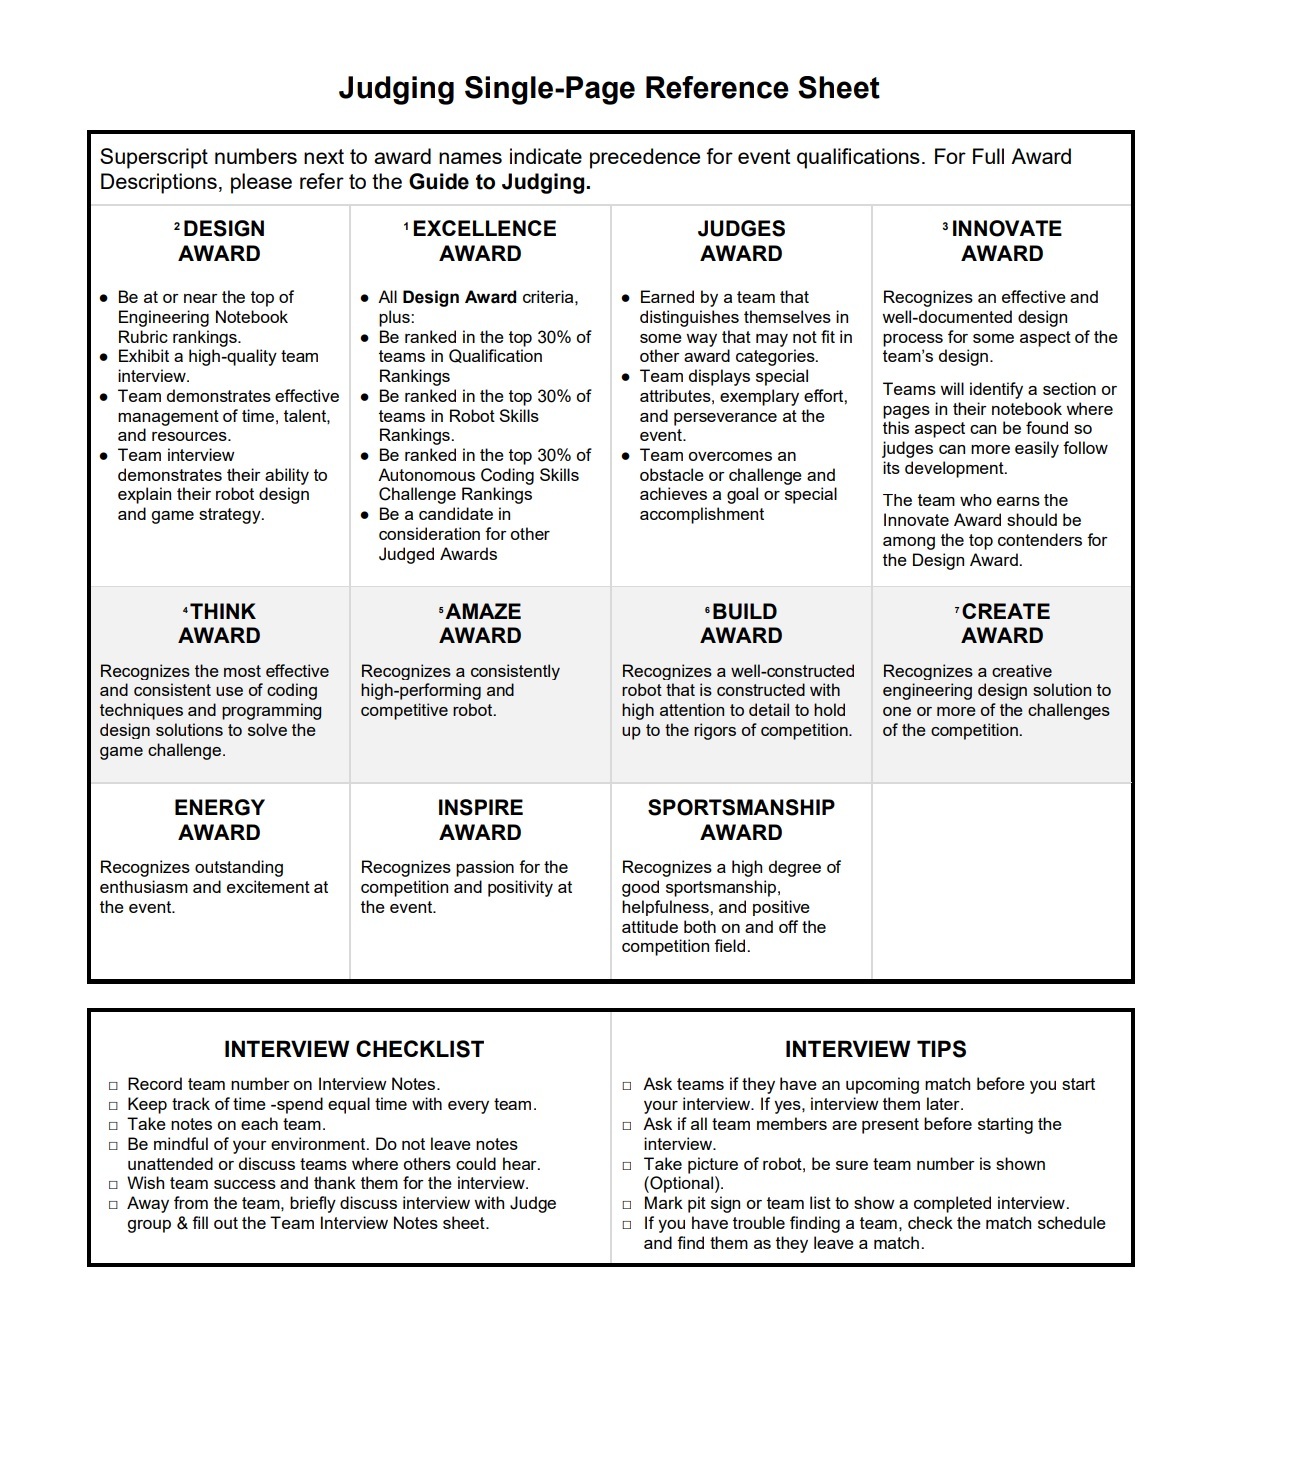 12 Judging Single Page Reference Sheet.jpg